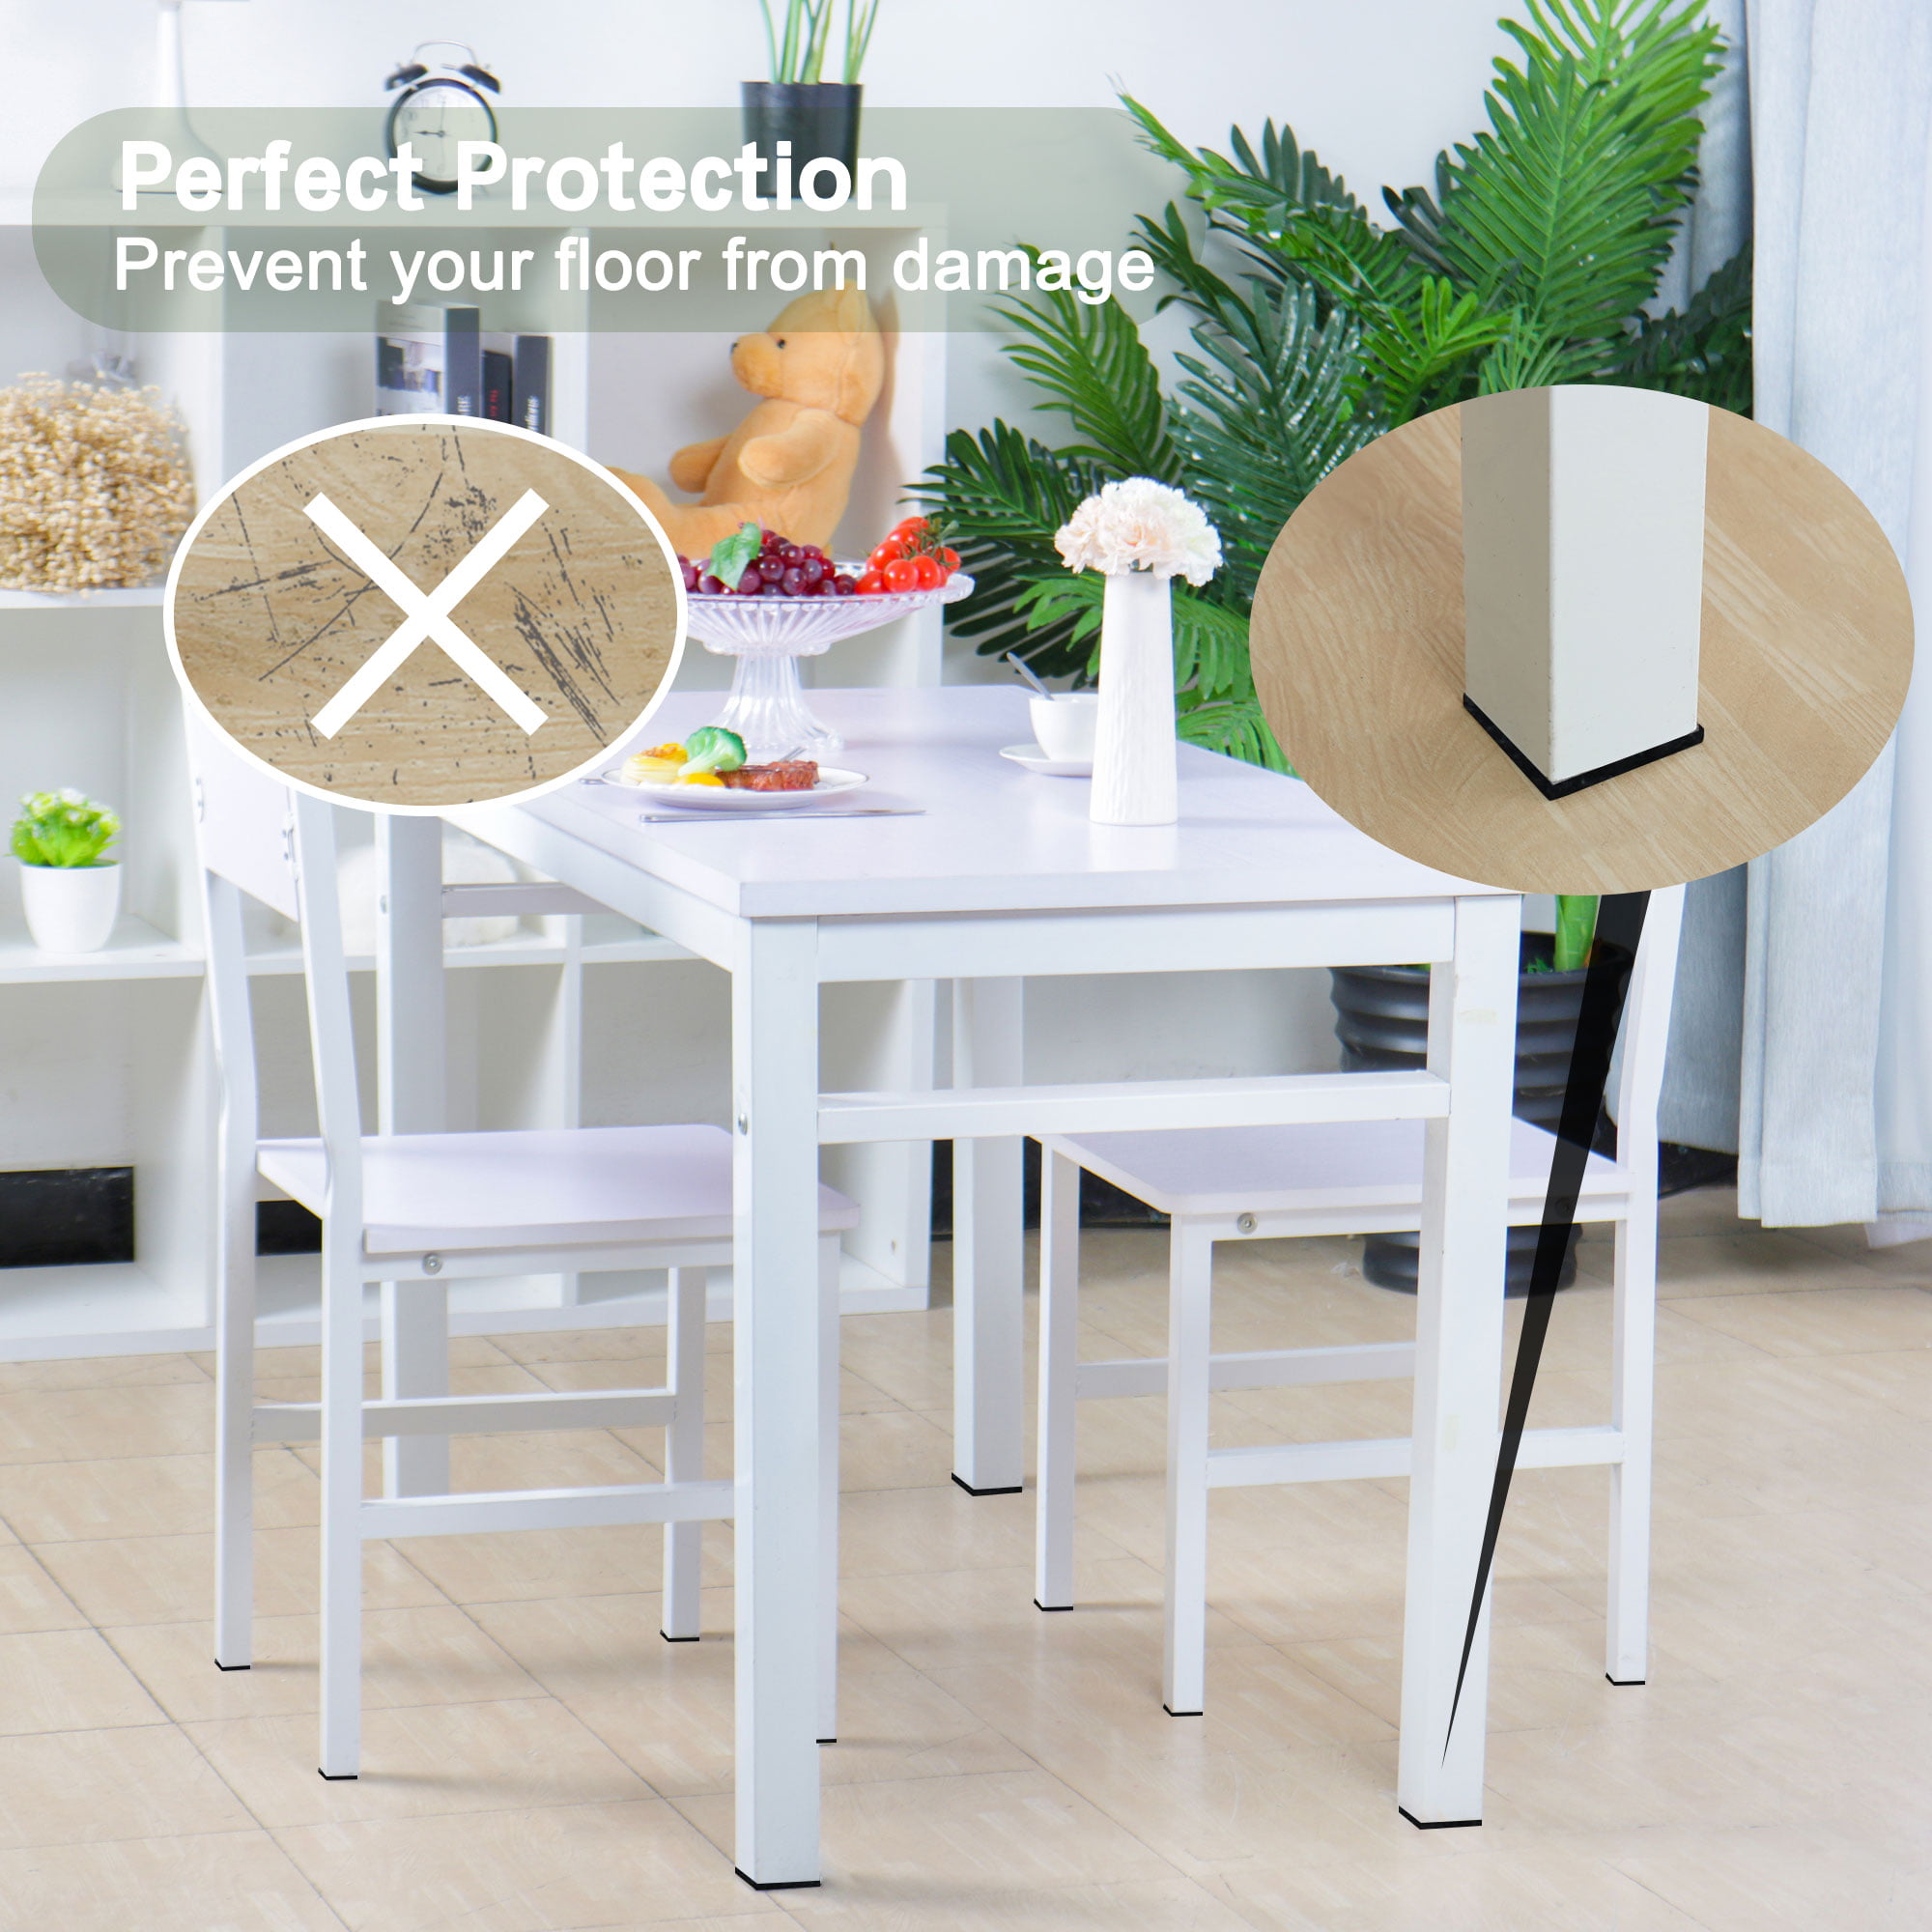 Details about   10Pcs U-Type Table Chair Leg Caps Feet Wrap Pads Floor Furniture Protectors Plug